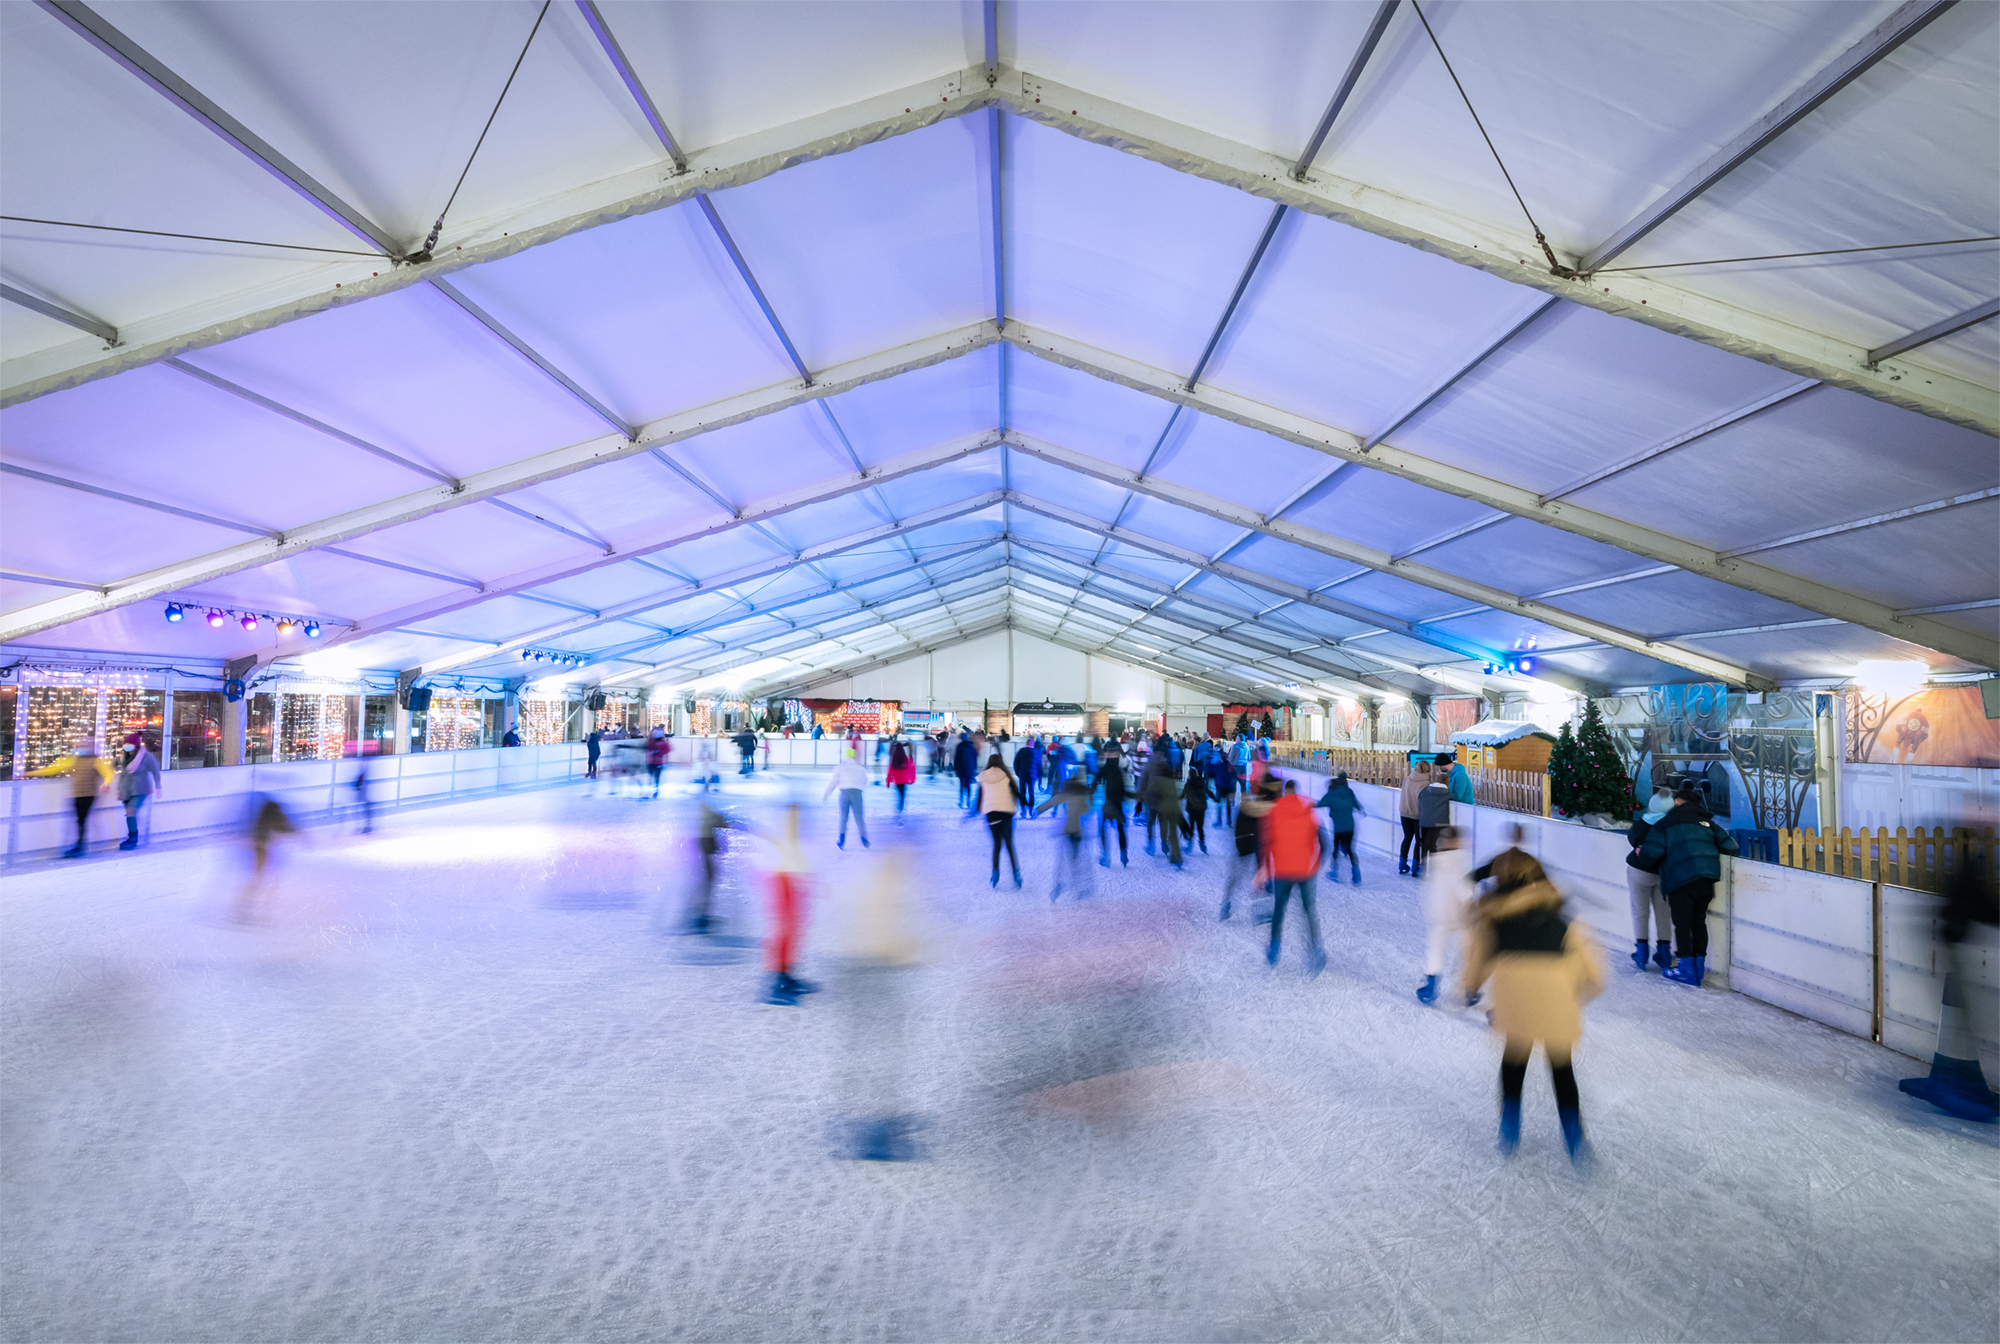 Ice Skating Blanchardstown returns in 2023 to Millenium Park